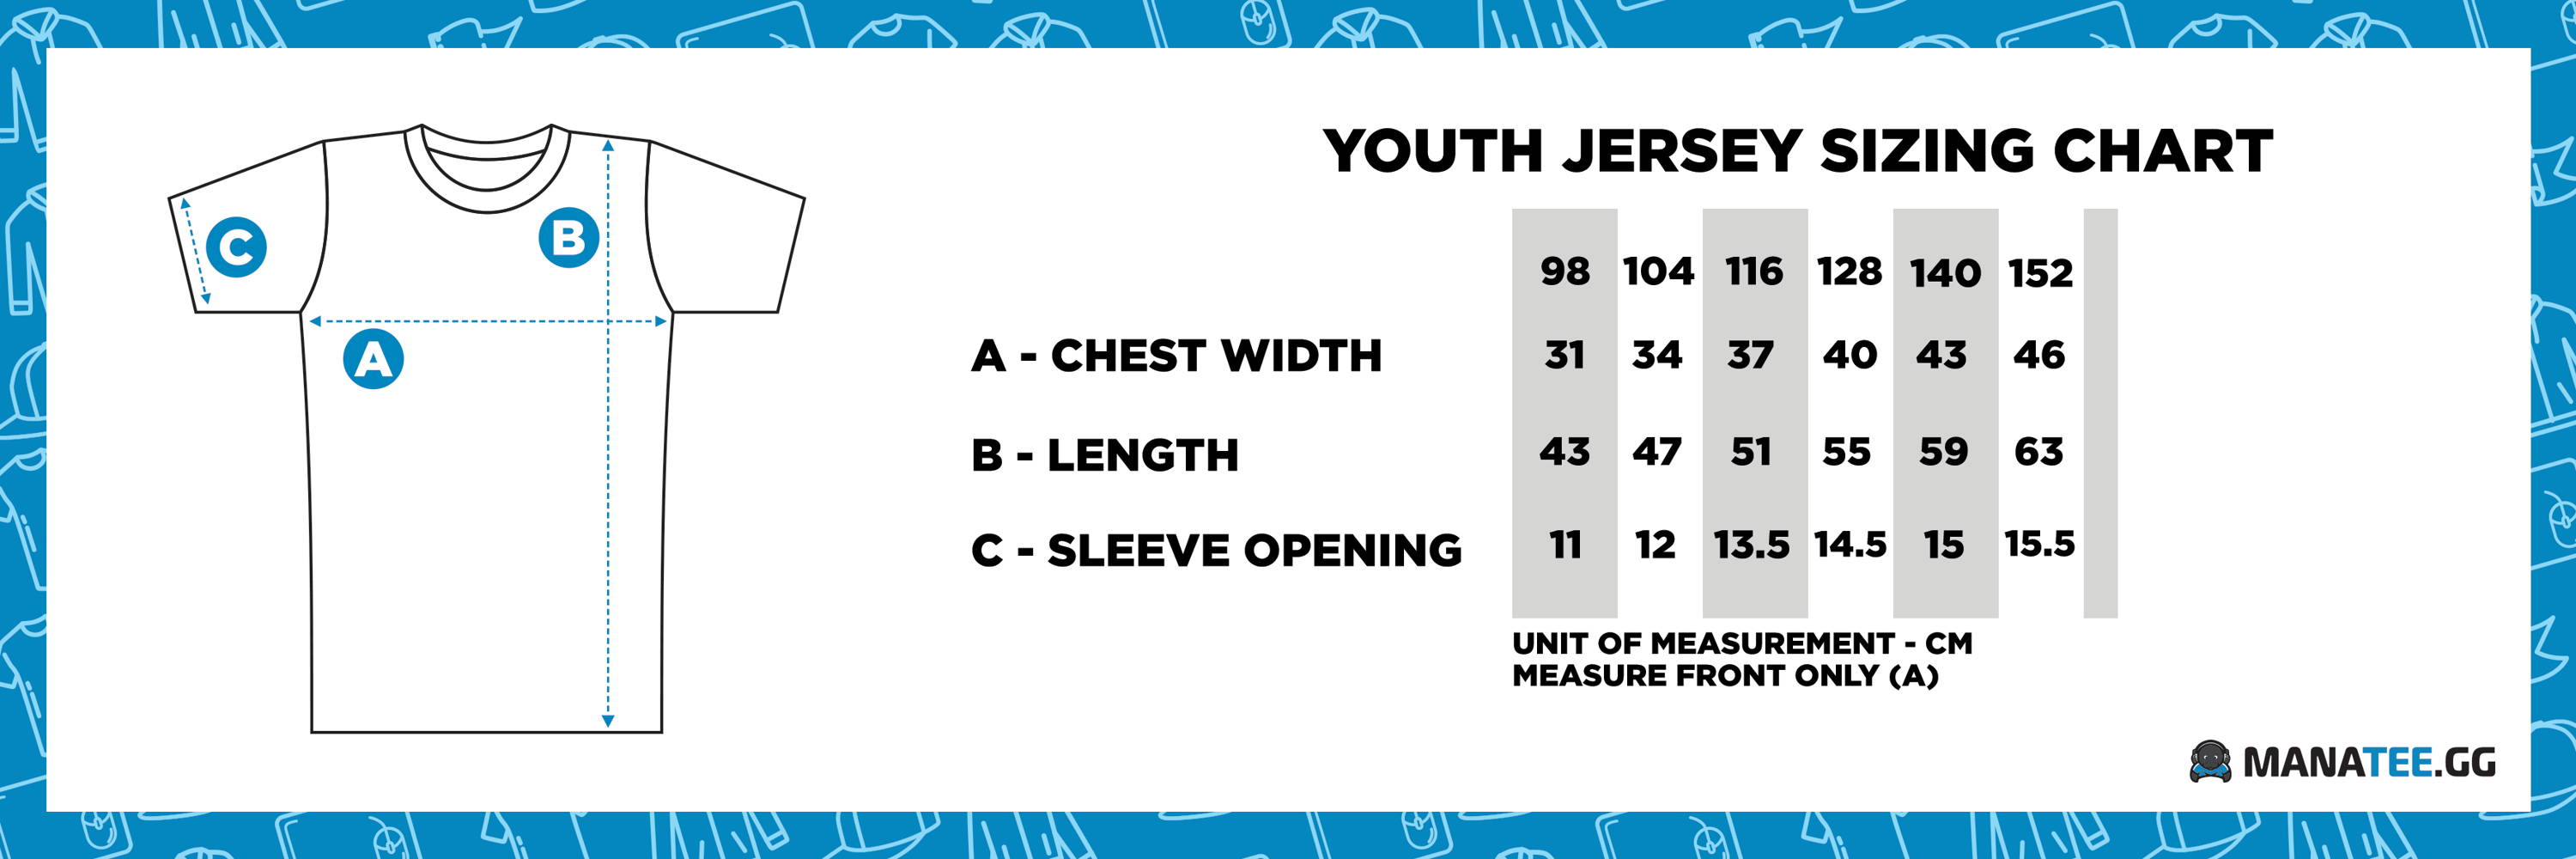 Manatee.GG Esports Jersey Gaming Size Chart - Youth